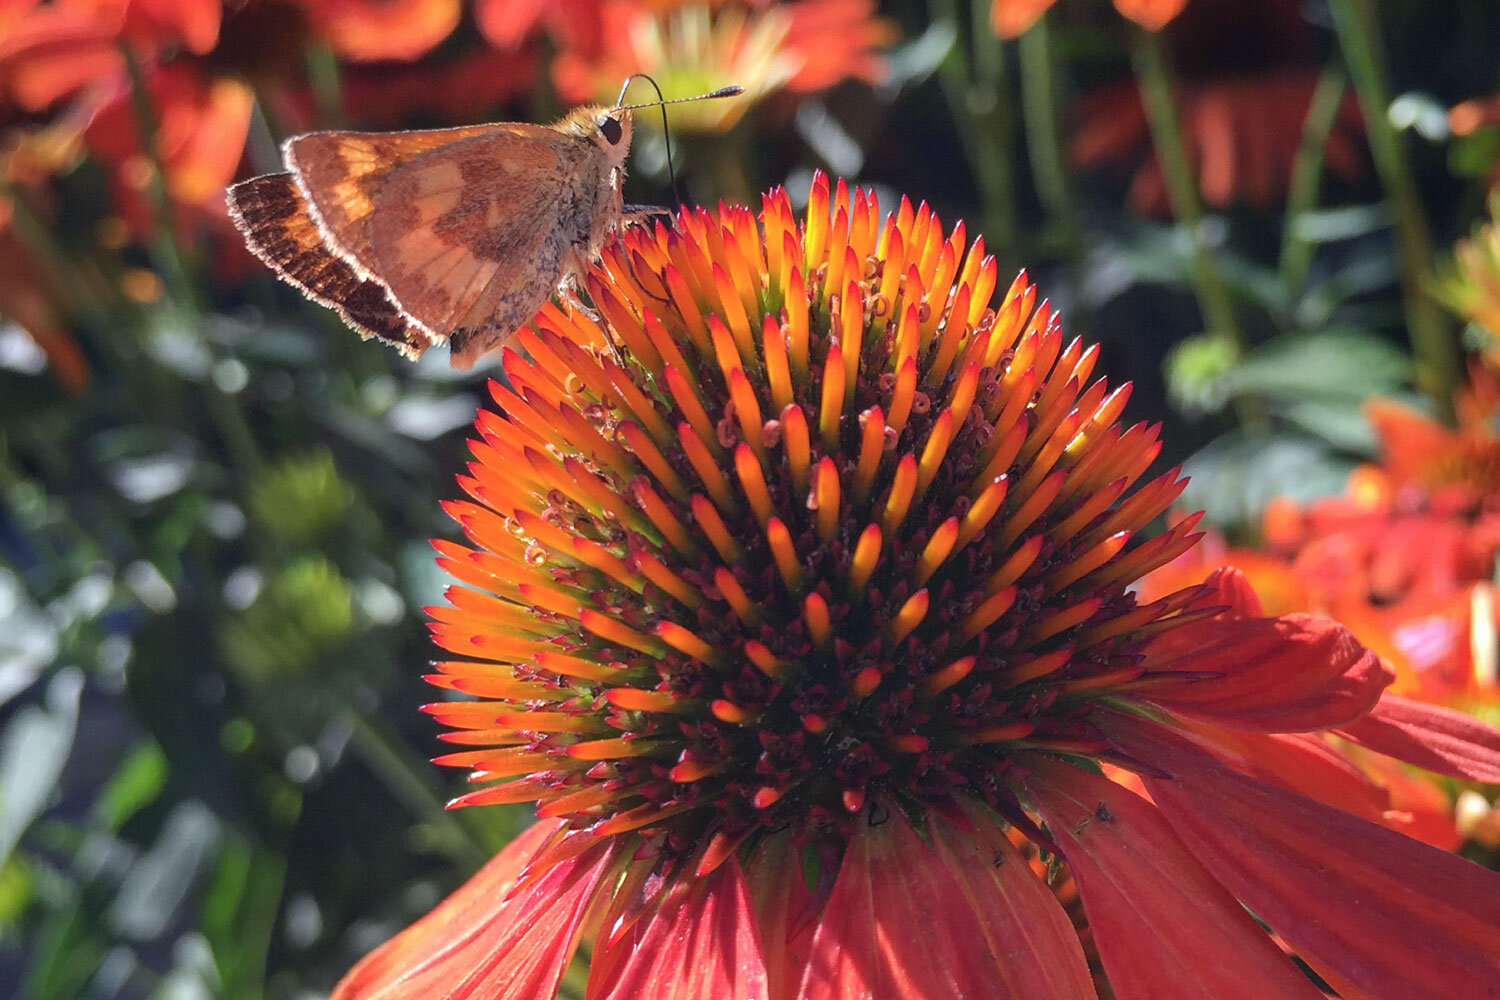 https://images.squarespace-cdn.com/content/v1/54fbb611e4b0d7c1e151d22a/1609896003357-Y2QPDXP972FJ1F19A6D9/Echinacea-with-Butterfly-at-Swansons-Nursery.jpg